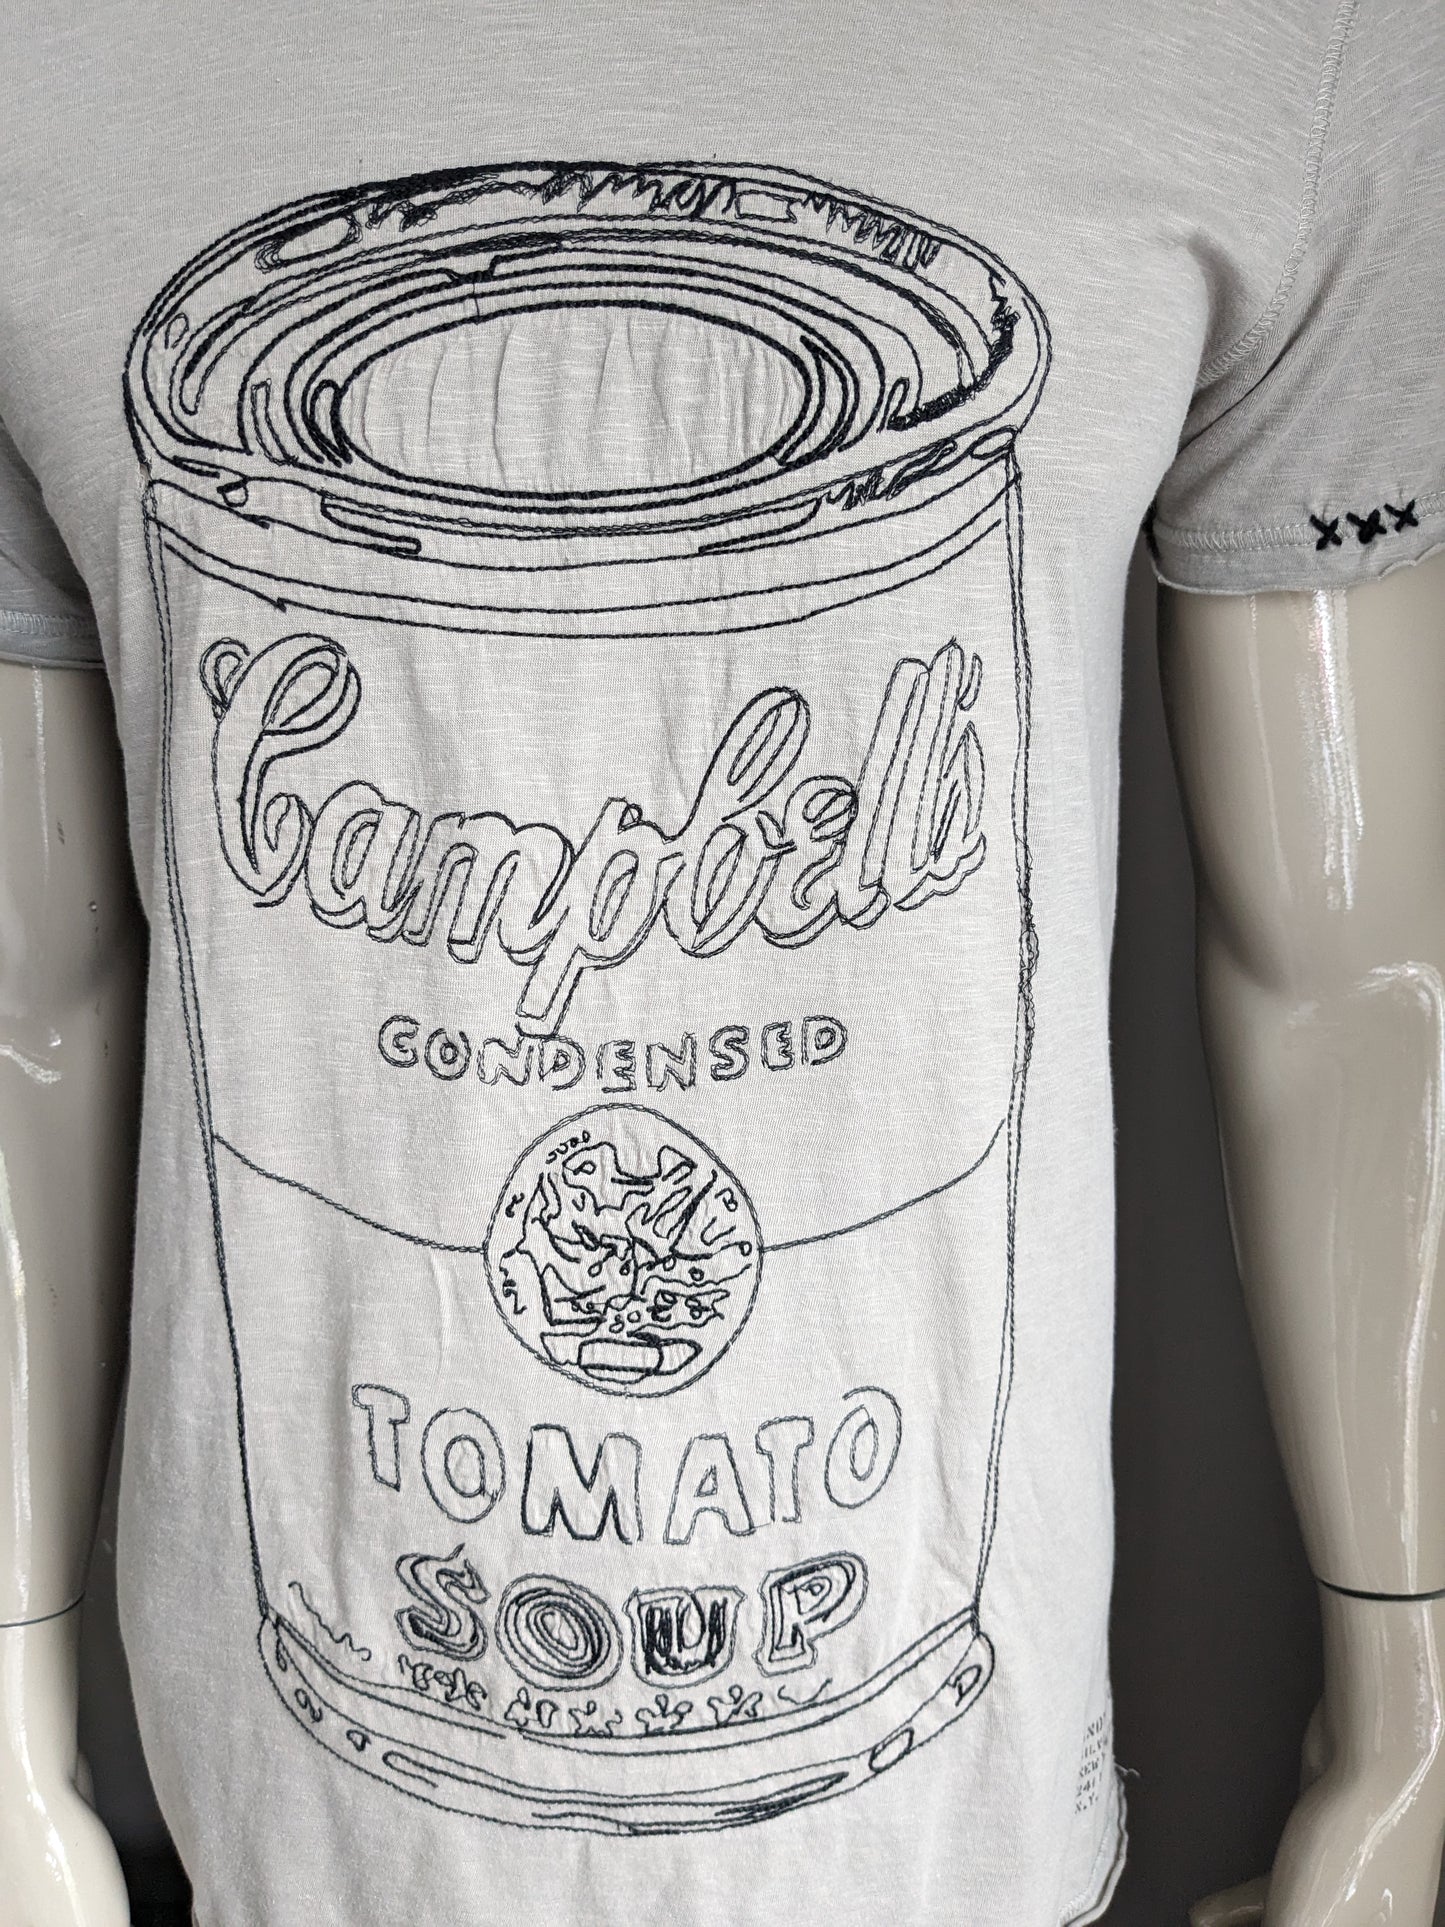 Andy Warhol de Pepe Jeans London Shirt. Kaki mezclado. Talla L.